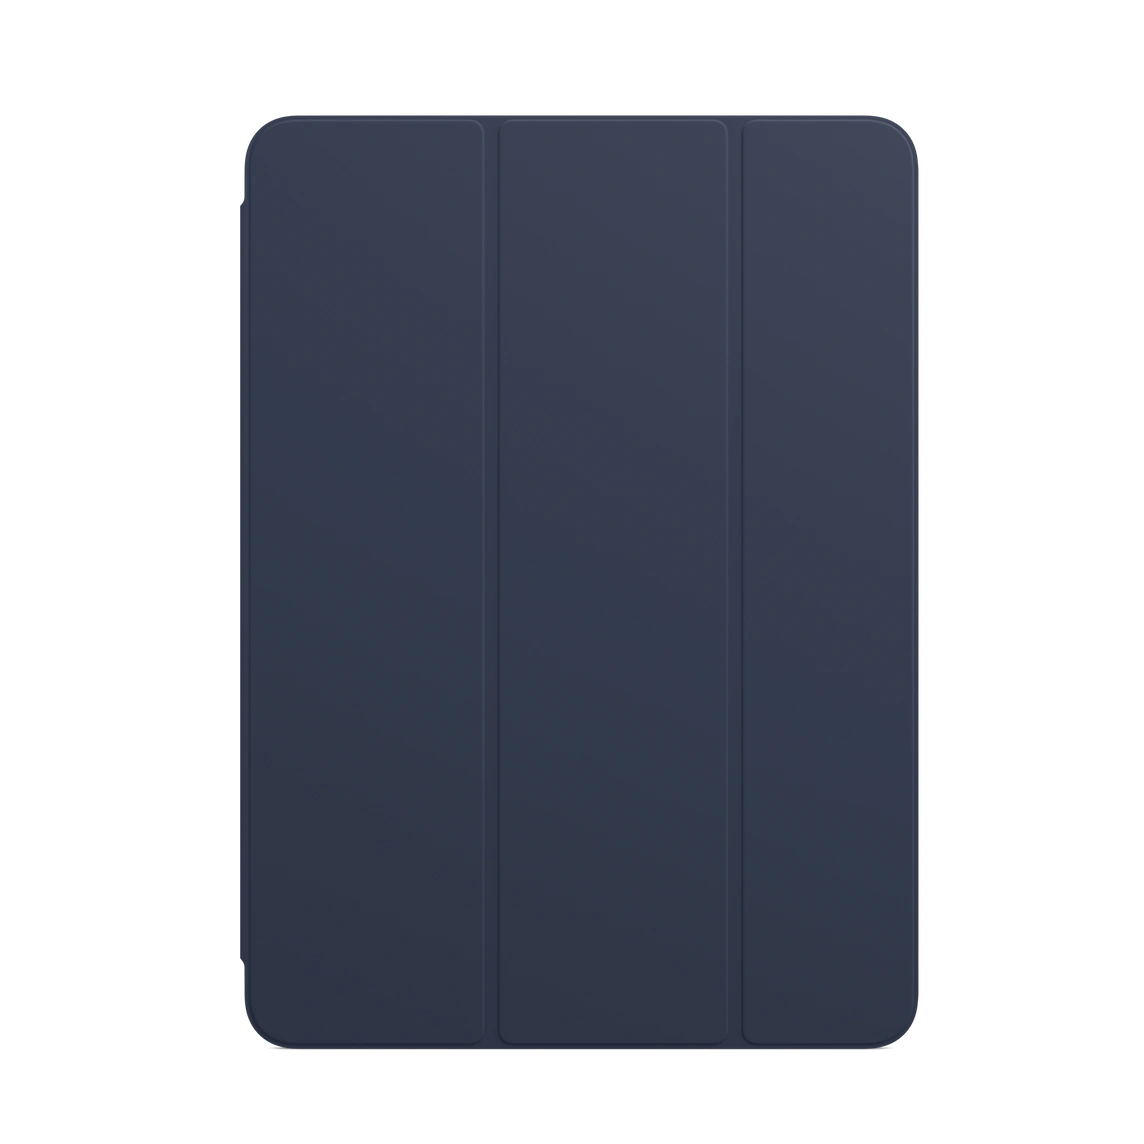 HC Smart Folio for iPad Pro 12.9-inch